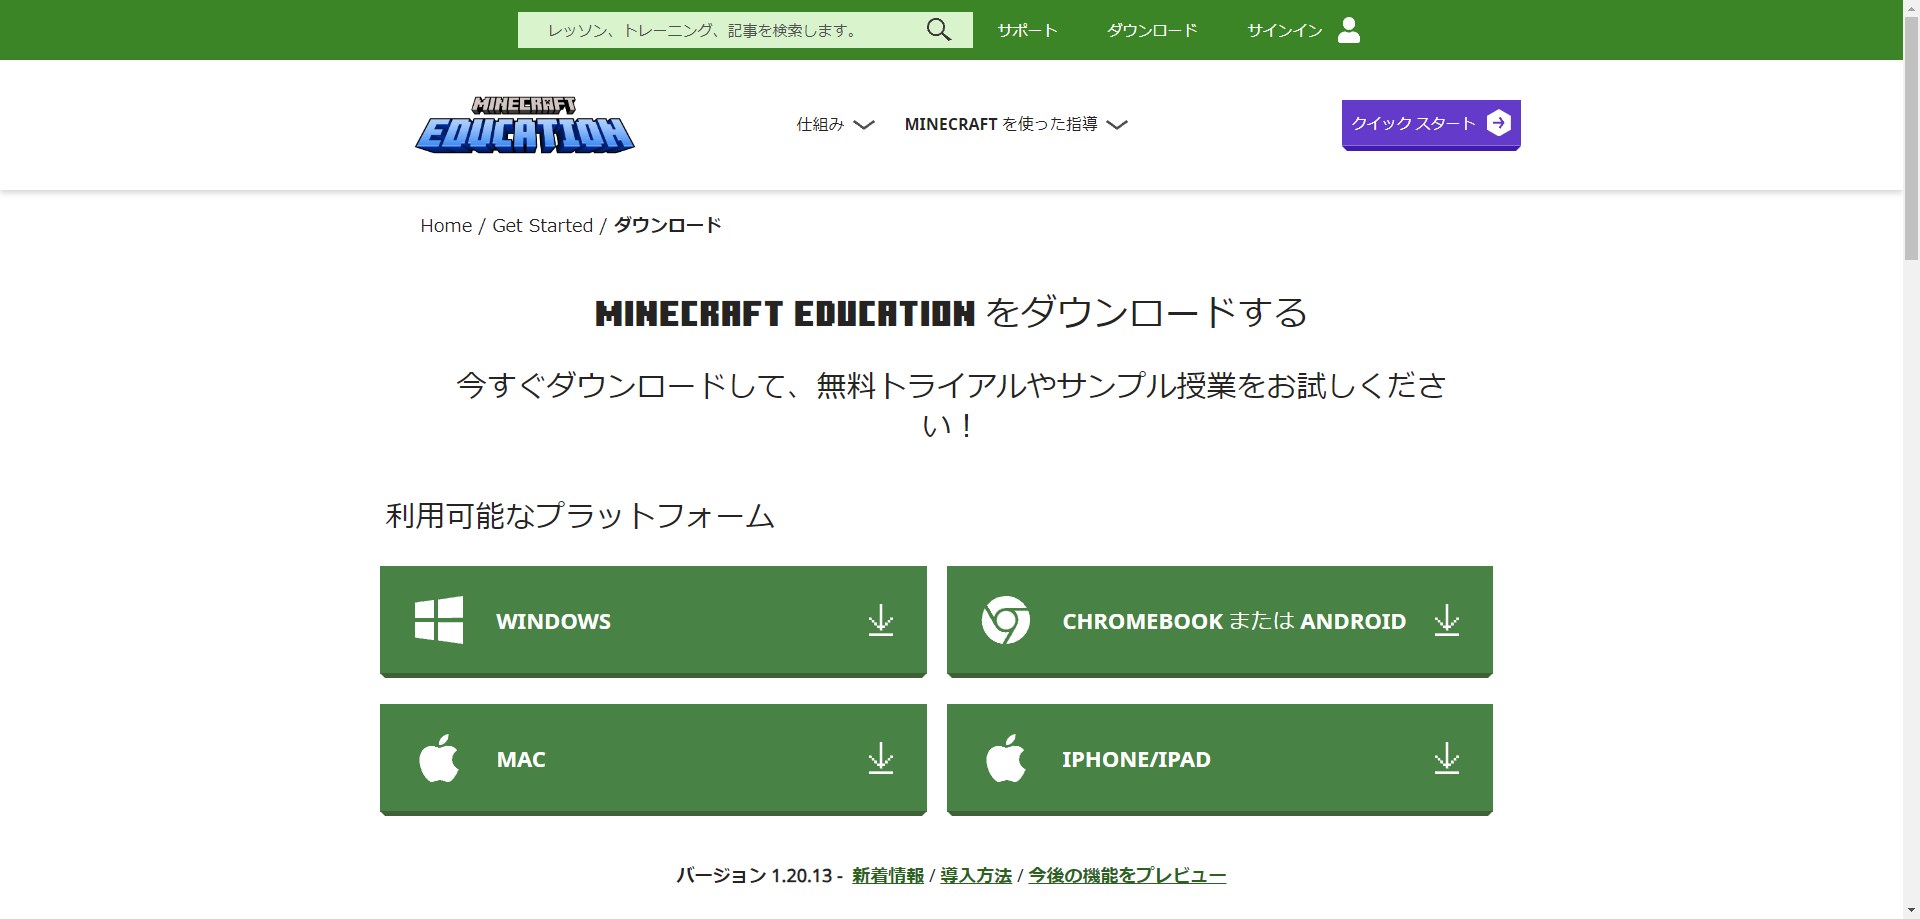 「Minecraft Education」